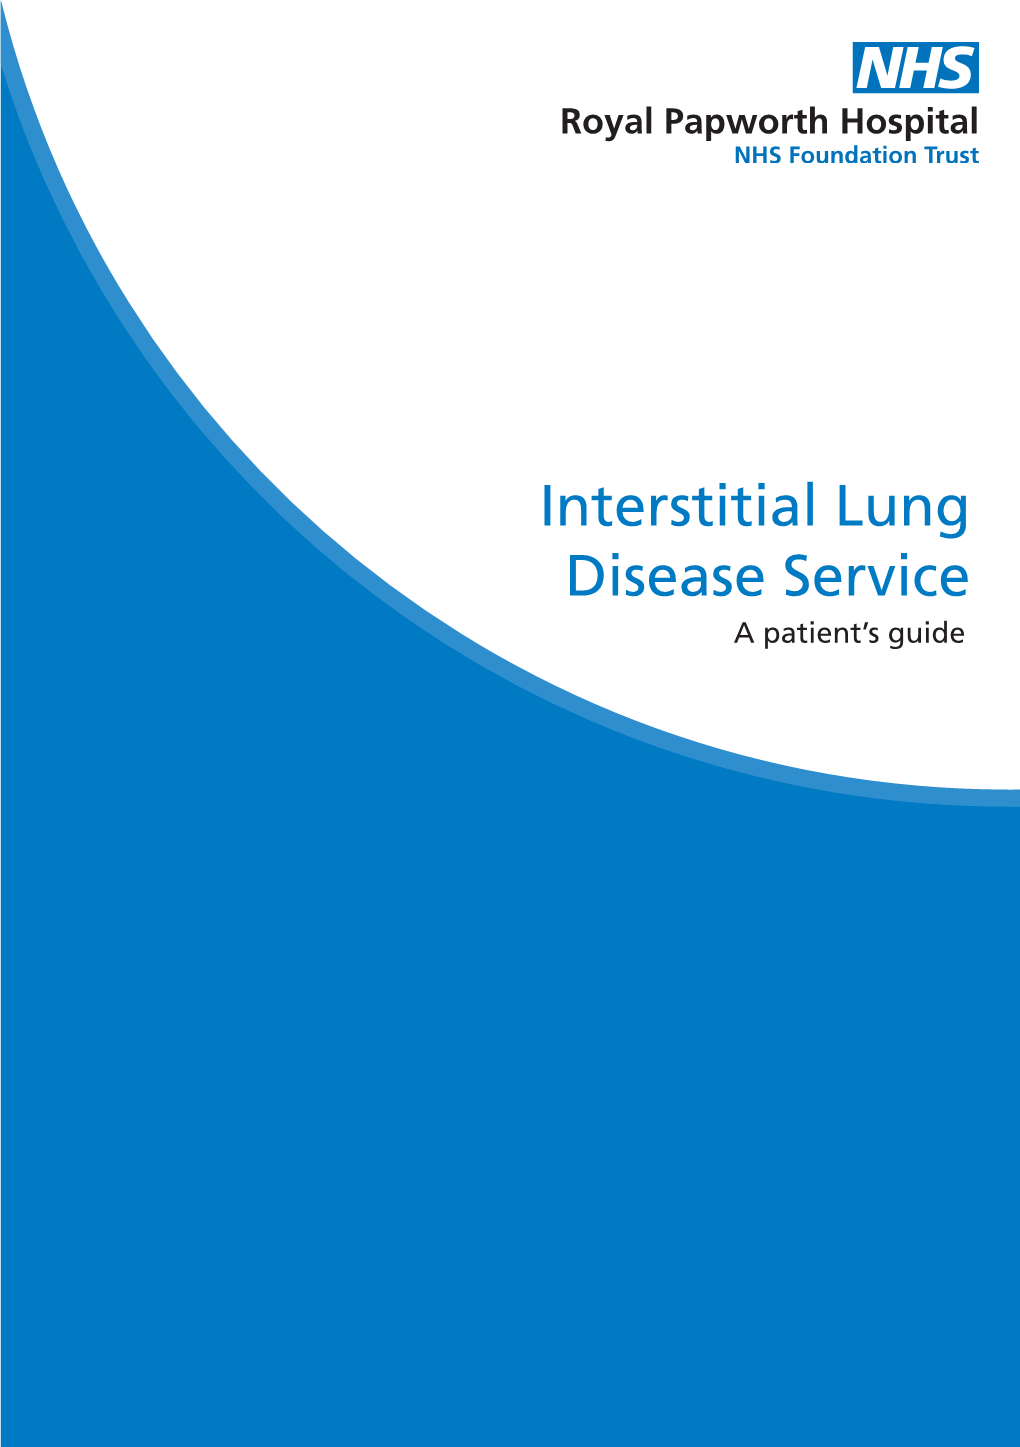 PI 80 Interstitial Lung Disease Service V5.1.Indd